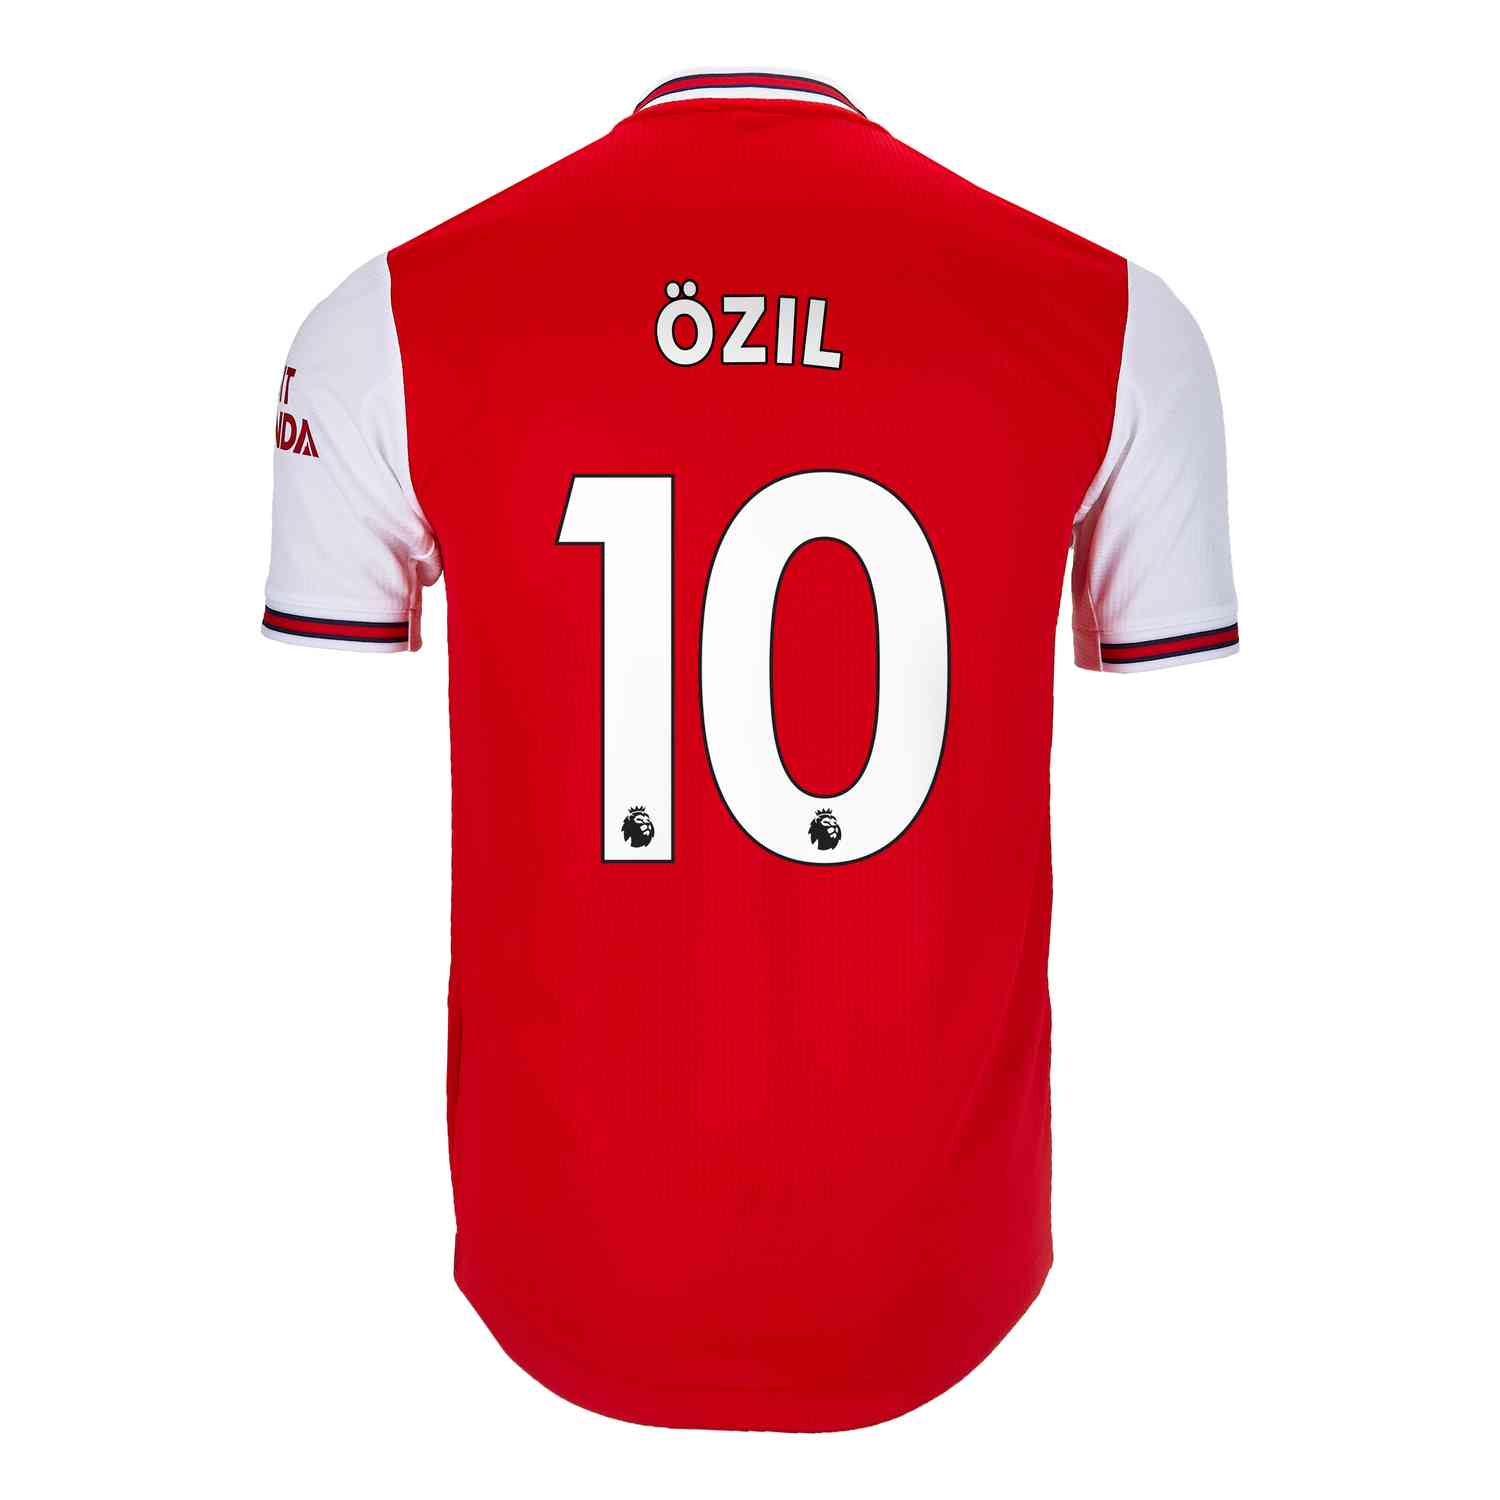 201920 Adidas Mesut Ozil Arsenal Home Authentic Jersey Soccerpro